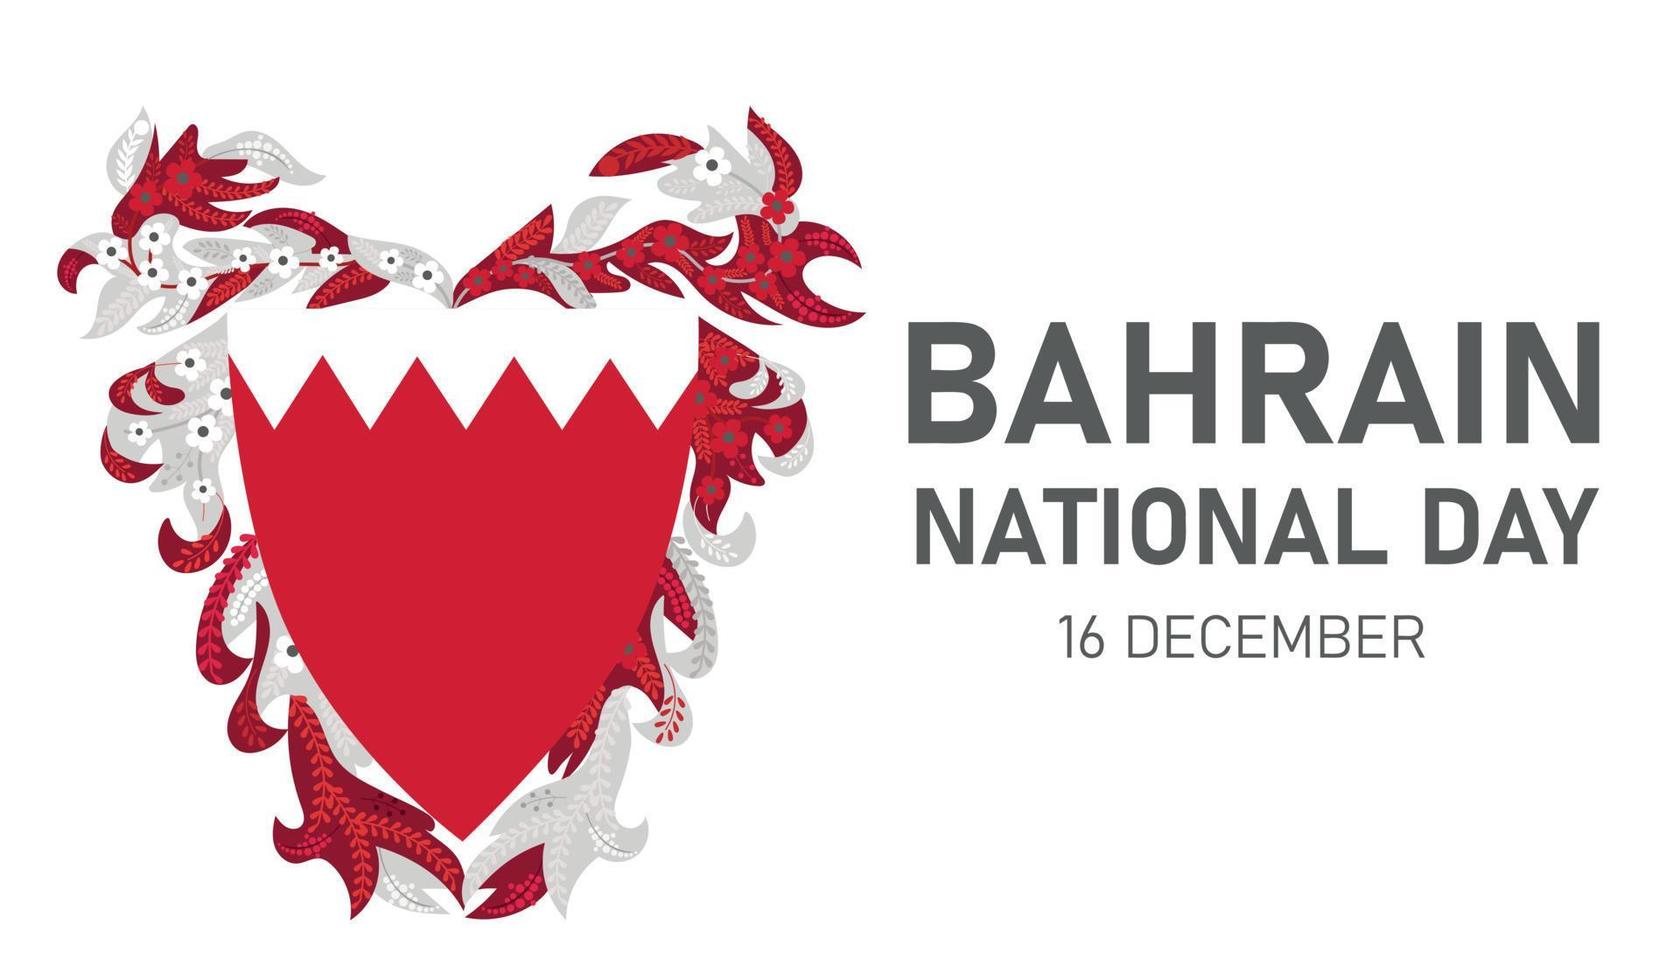 nationale feestdag van bahrein vector